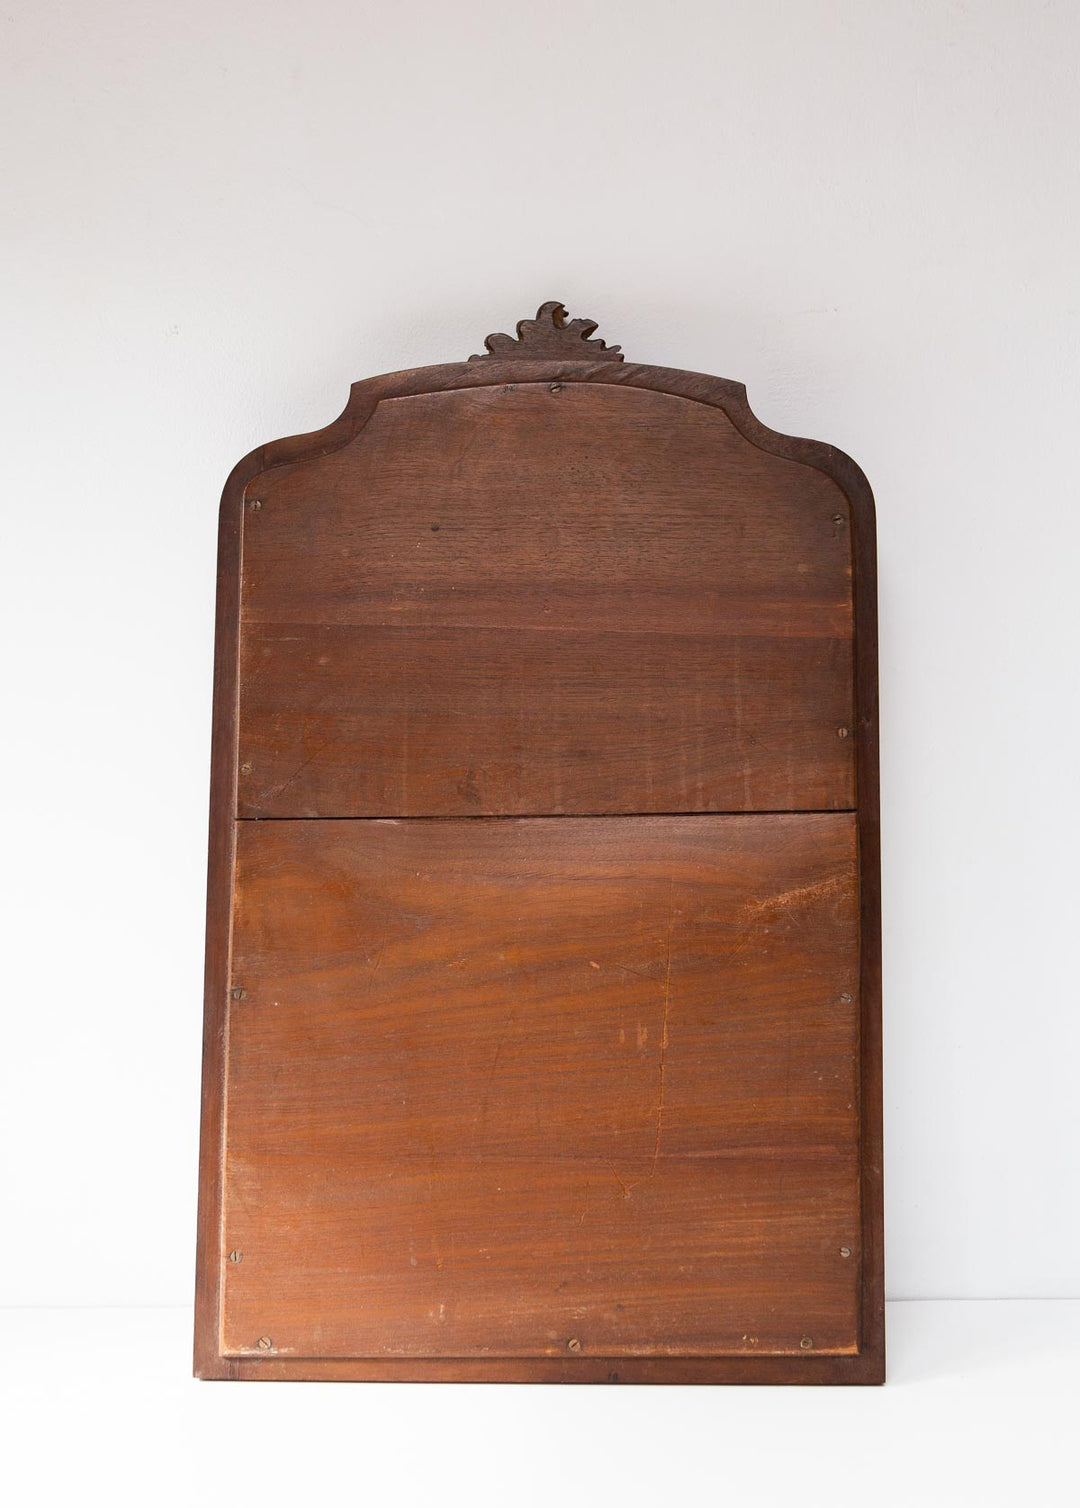 Antiguo espejo francés madera copete dorado